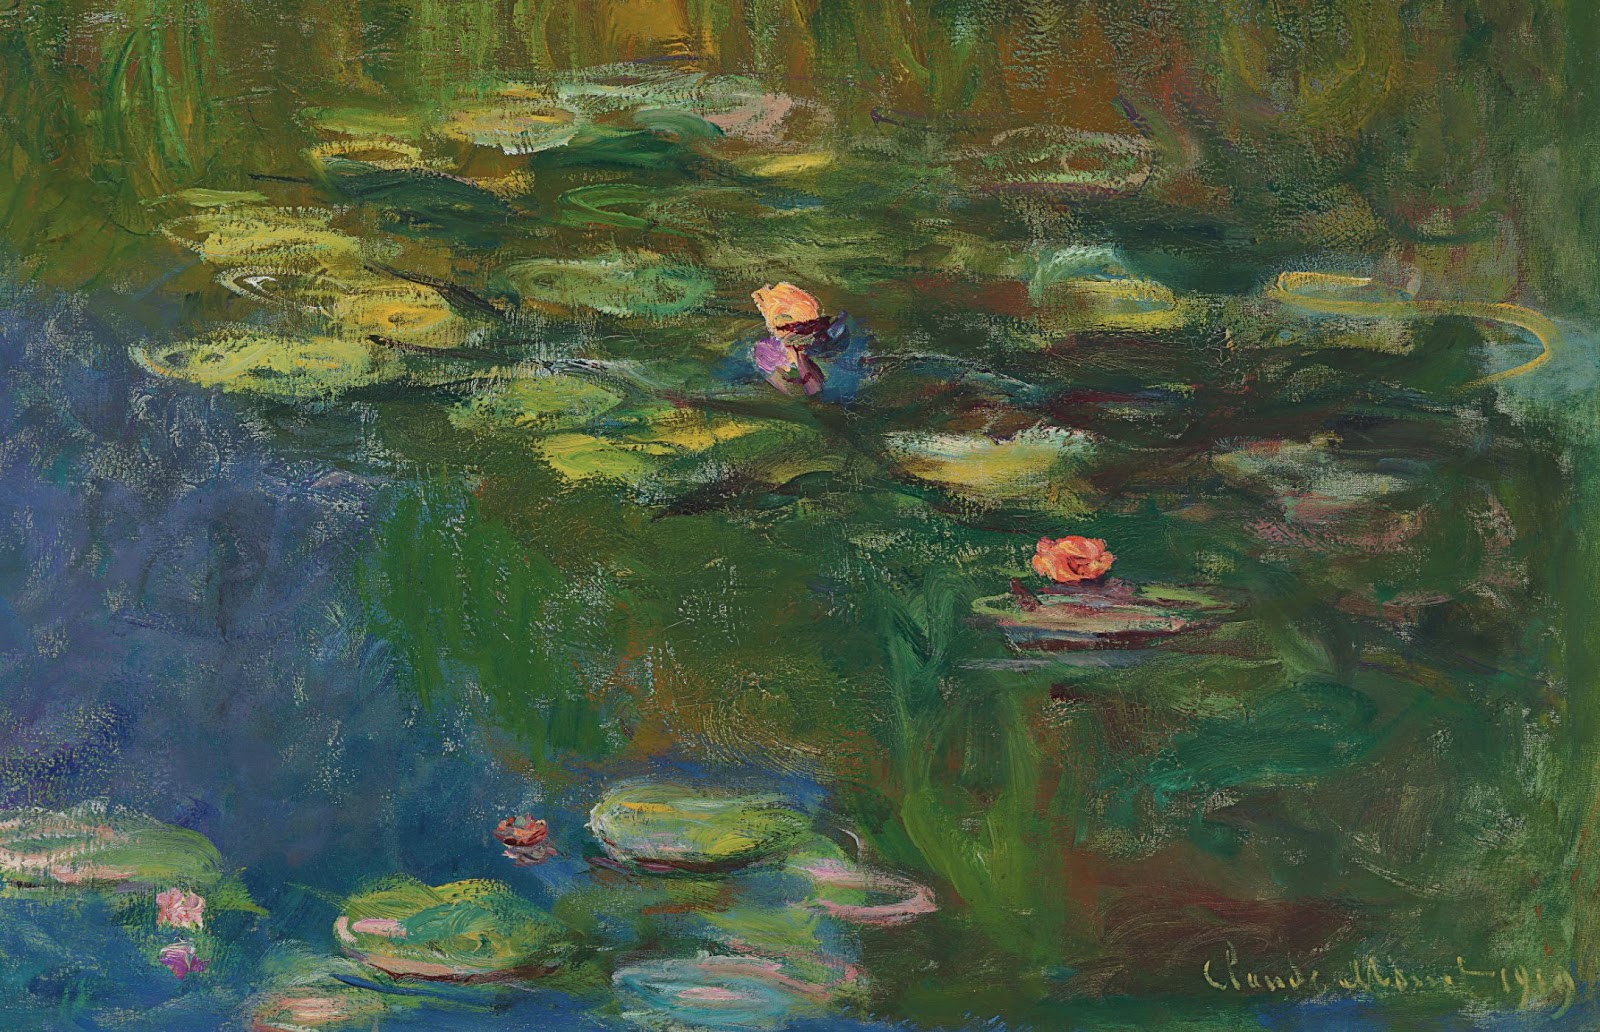 Claude+Monet-1840-1926 (425).jpg